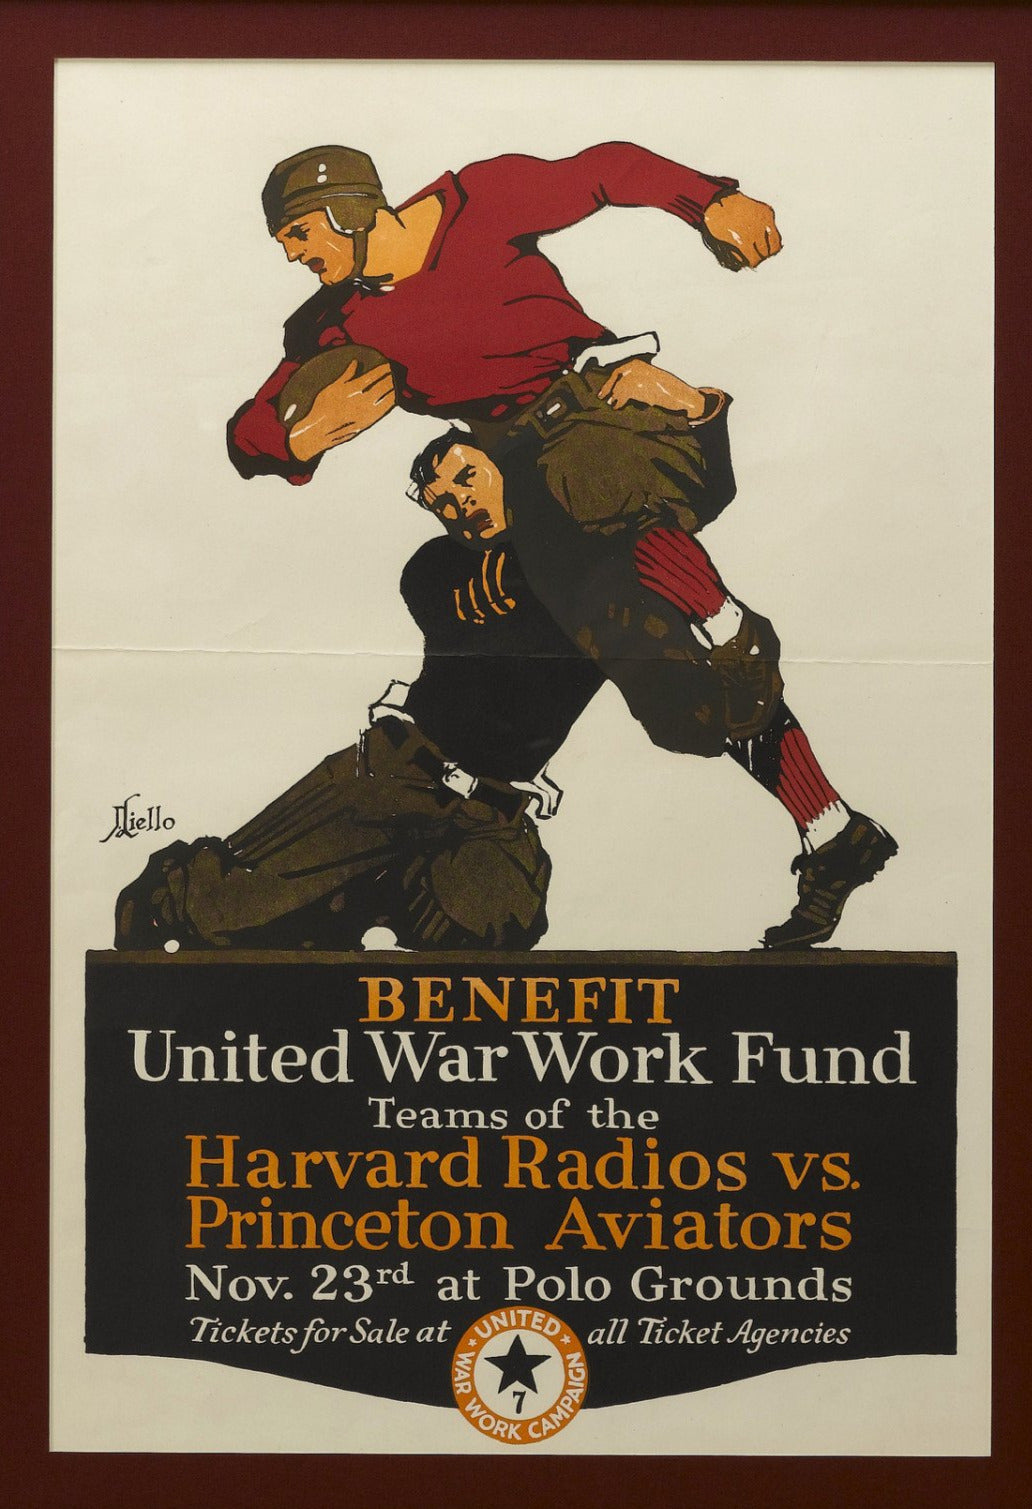 Harvard Radios vs. Princeton Aviators Vintage War Effort Football Poster, Circa 1918